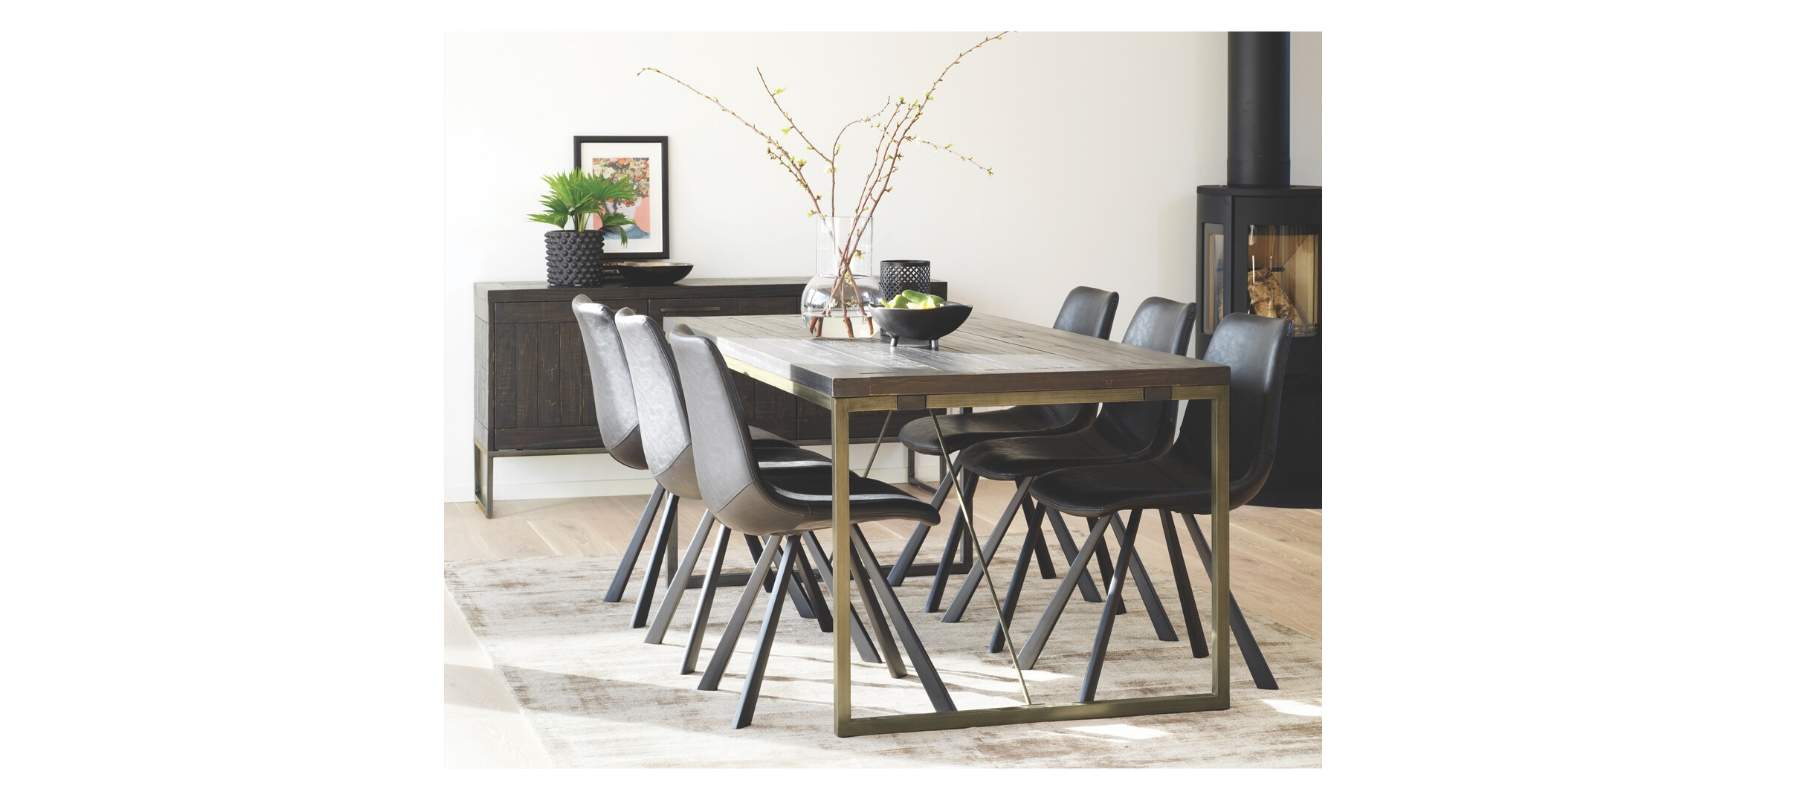 Tavistock Industrial Dining Table with bronze legs